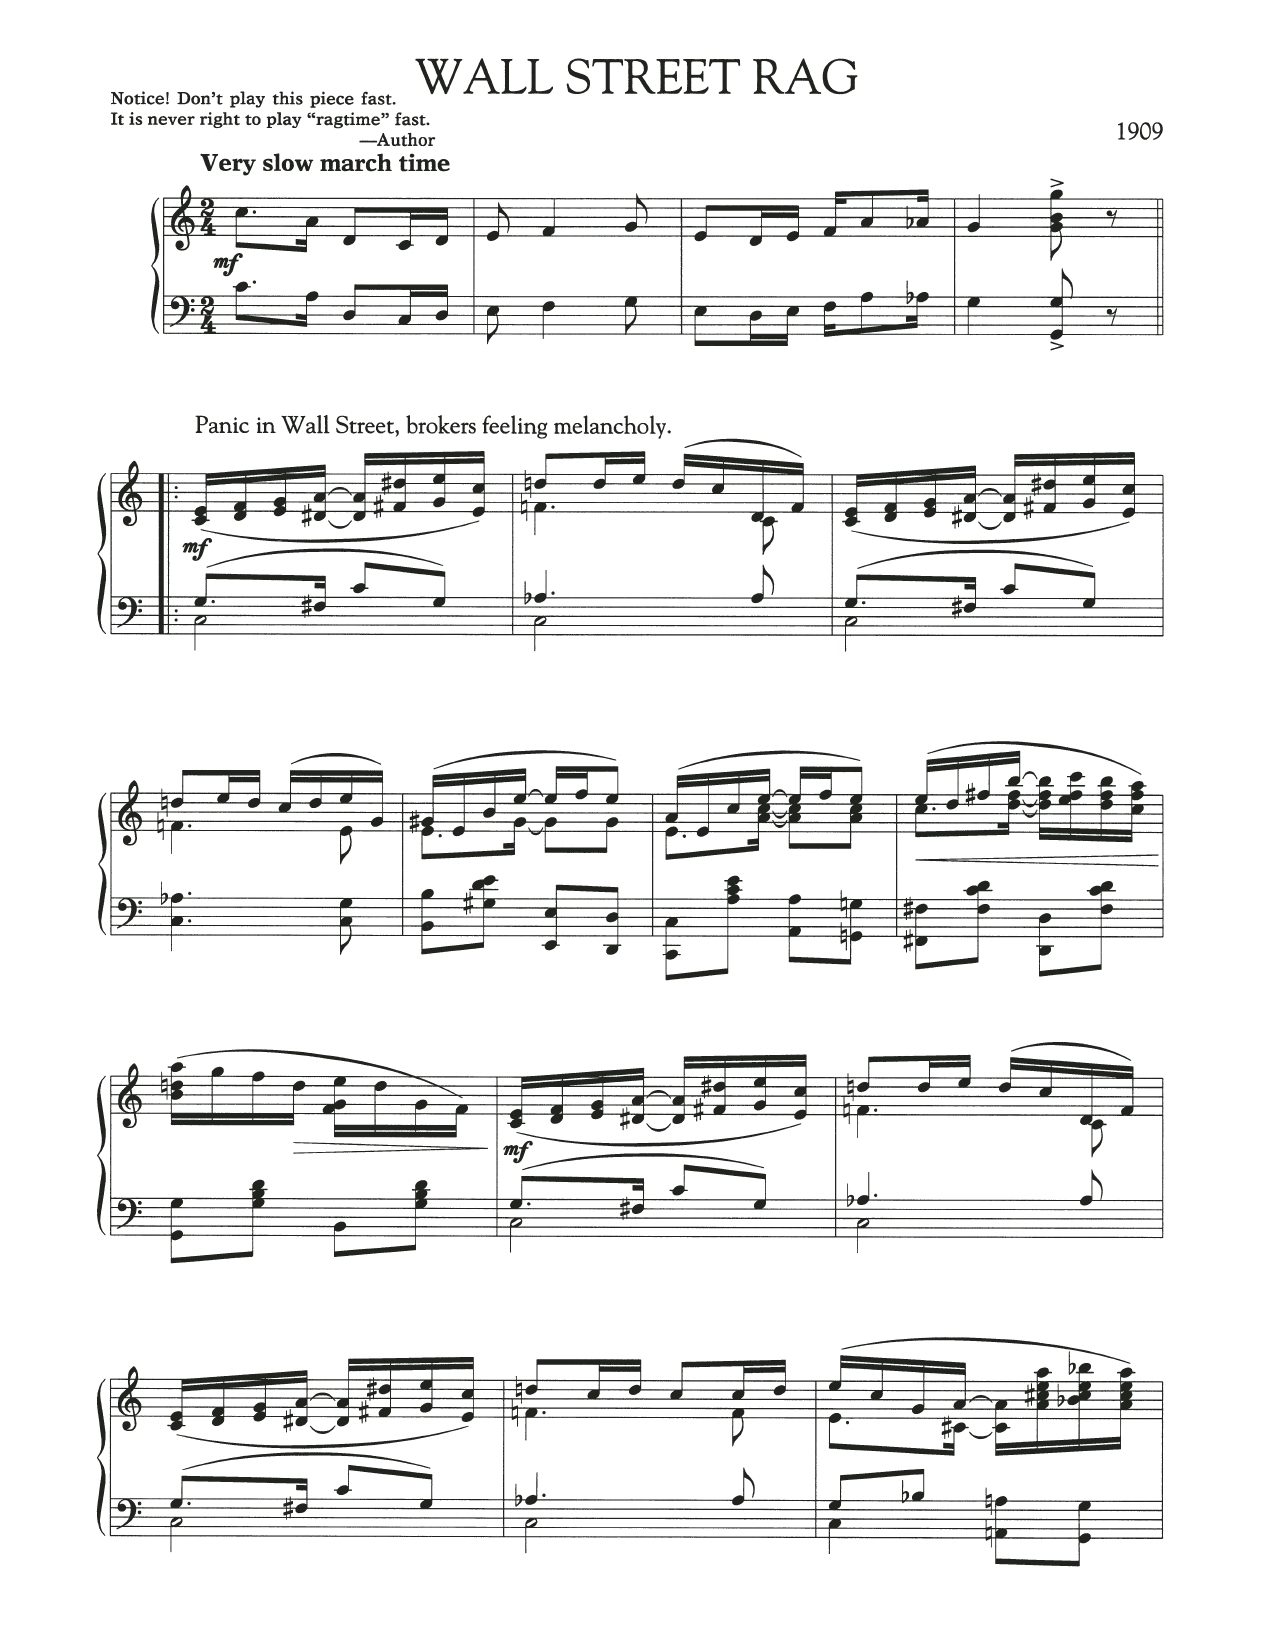 Scott Joplin Wall Street Rag Sheet Music Notes & Chords for Piano Solo - Download or Print PDF